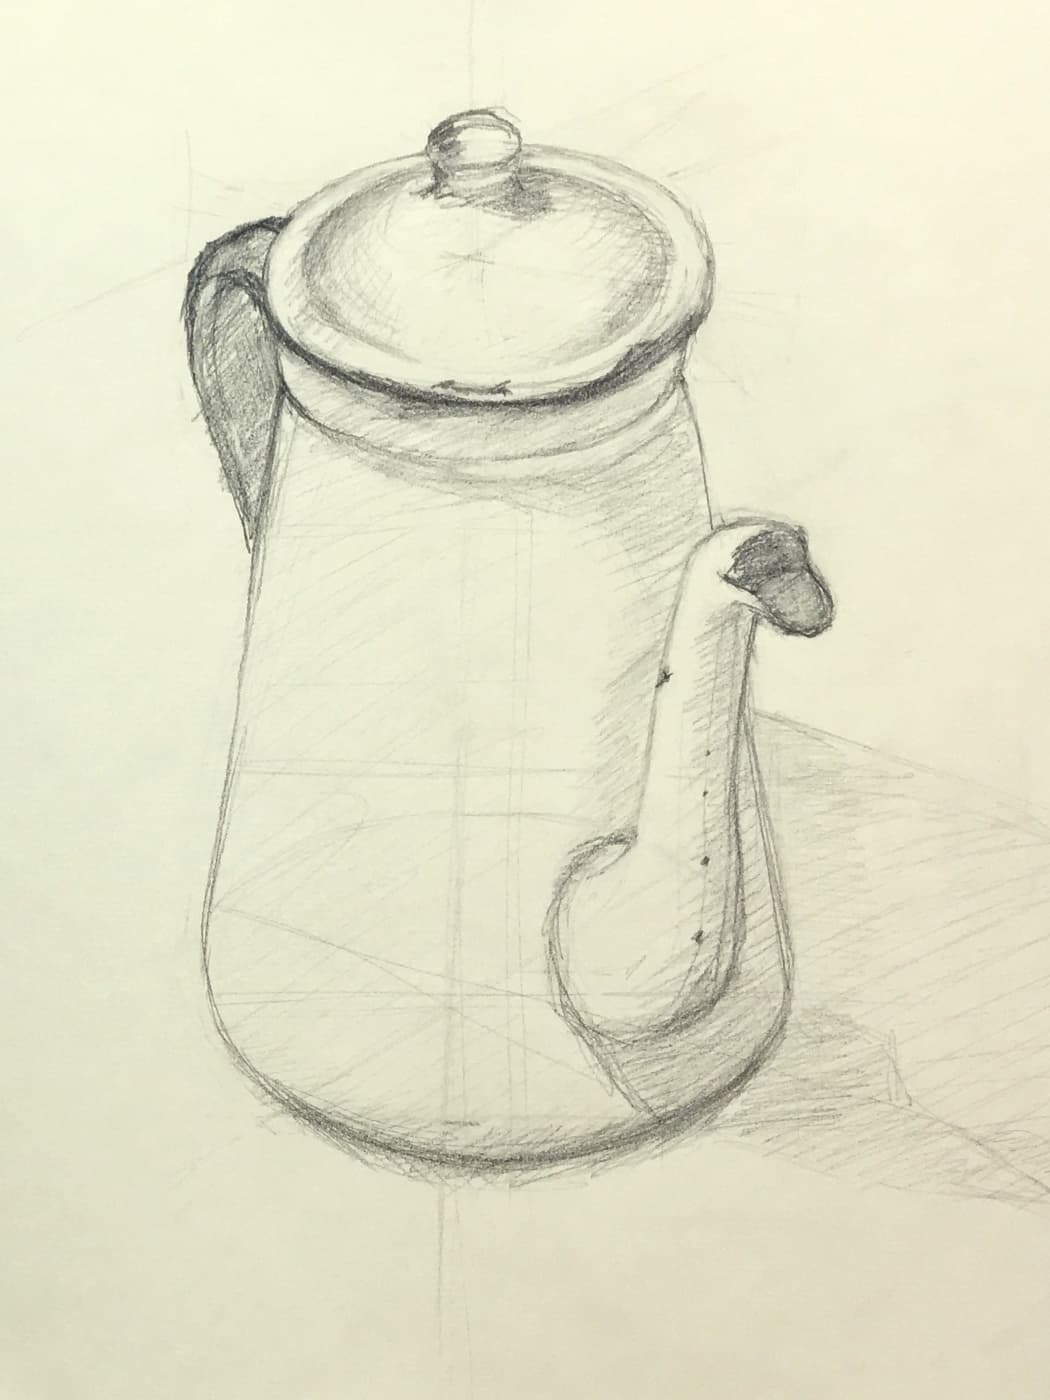 Pencil drawing of a teapot.